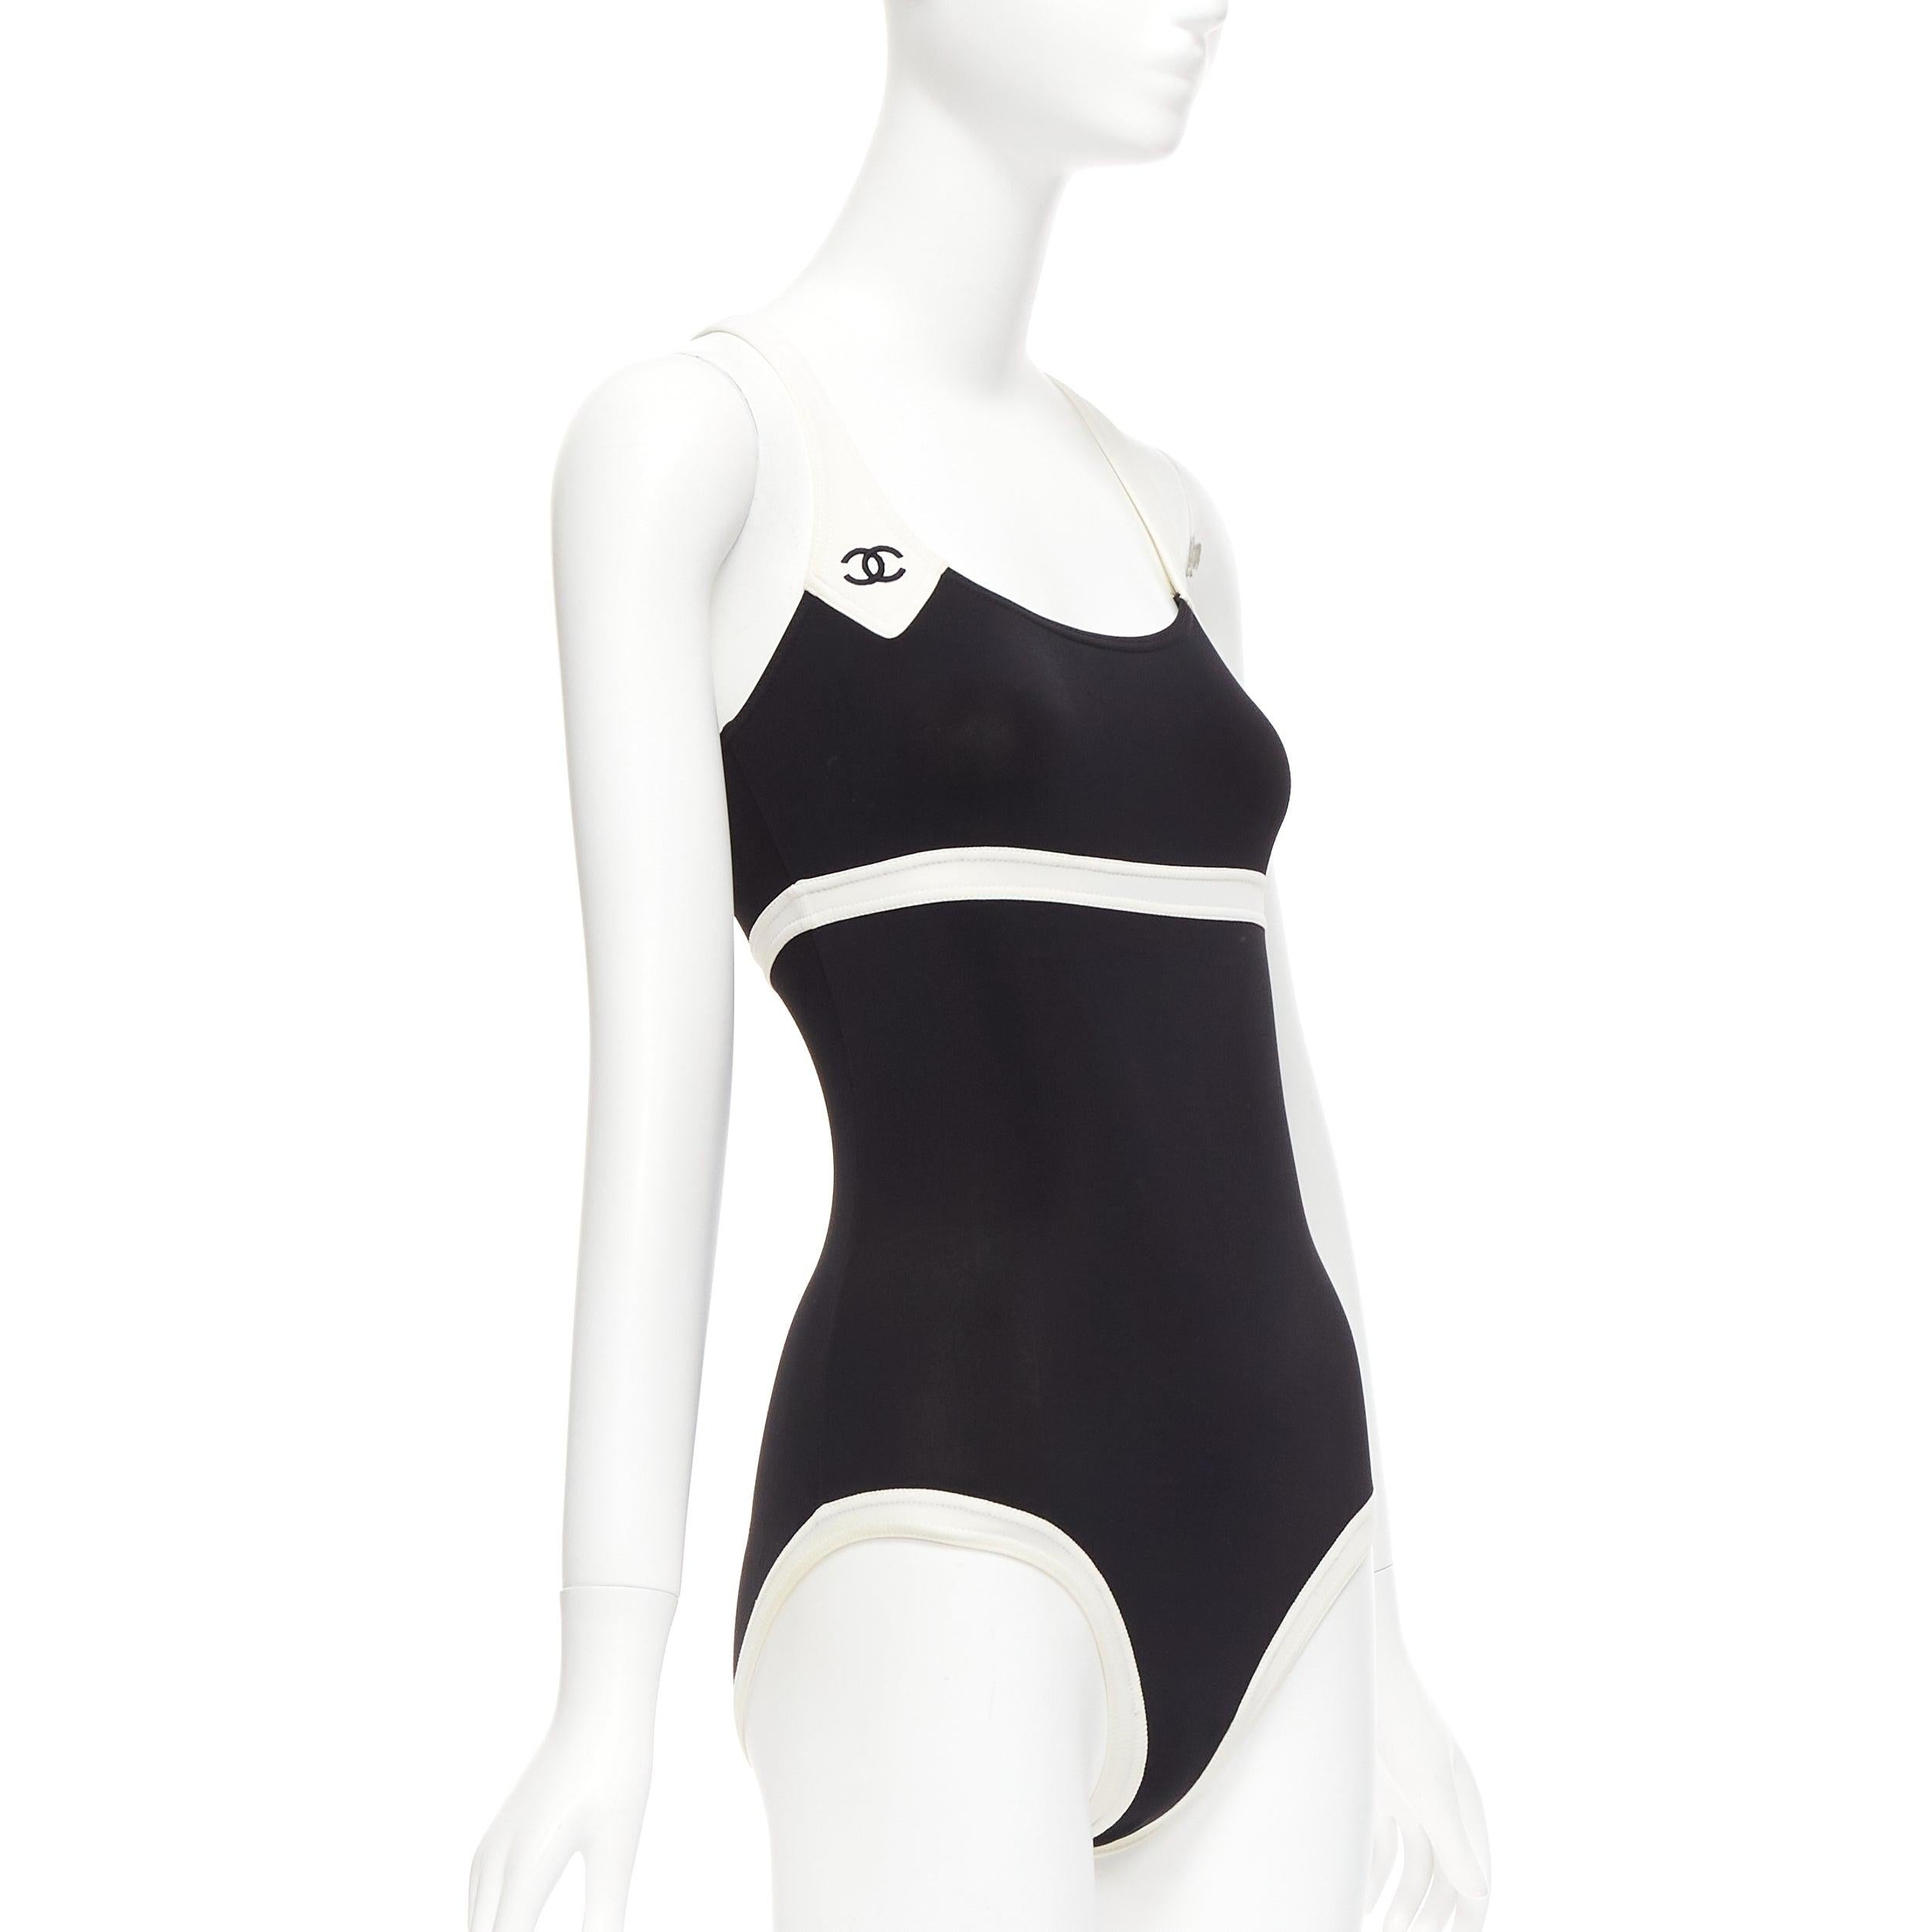 rare CHANEL 96C Vintage CC black cream colorblock swim bodysuit FR36 S
Reference: TGAS/D00908
Brand: Chanel
Designer: Karl Lagerfeld
Collection: 96C
Material: Nylon, Blend
Color: Black, Cream
Pattern: Solid
Closure: Slip On
Made in: